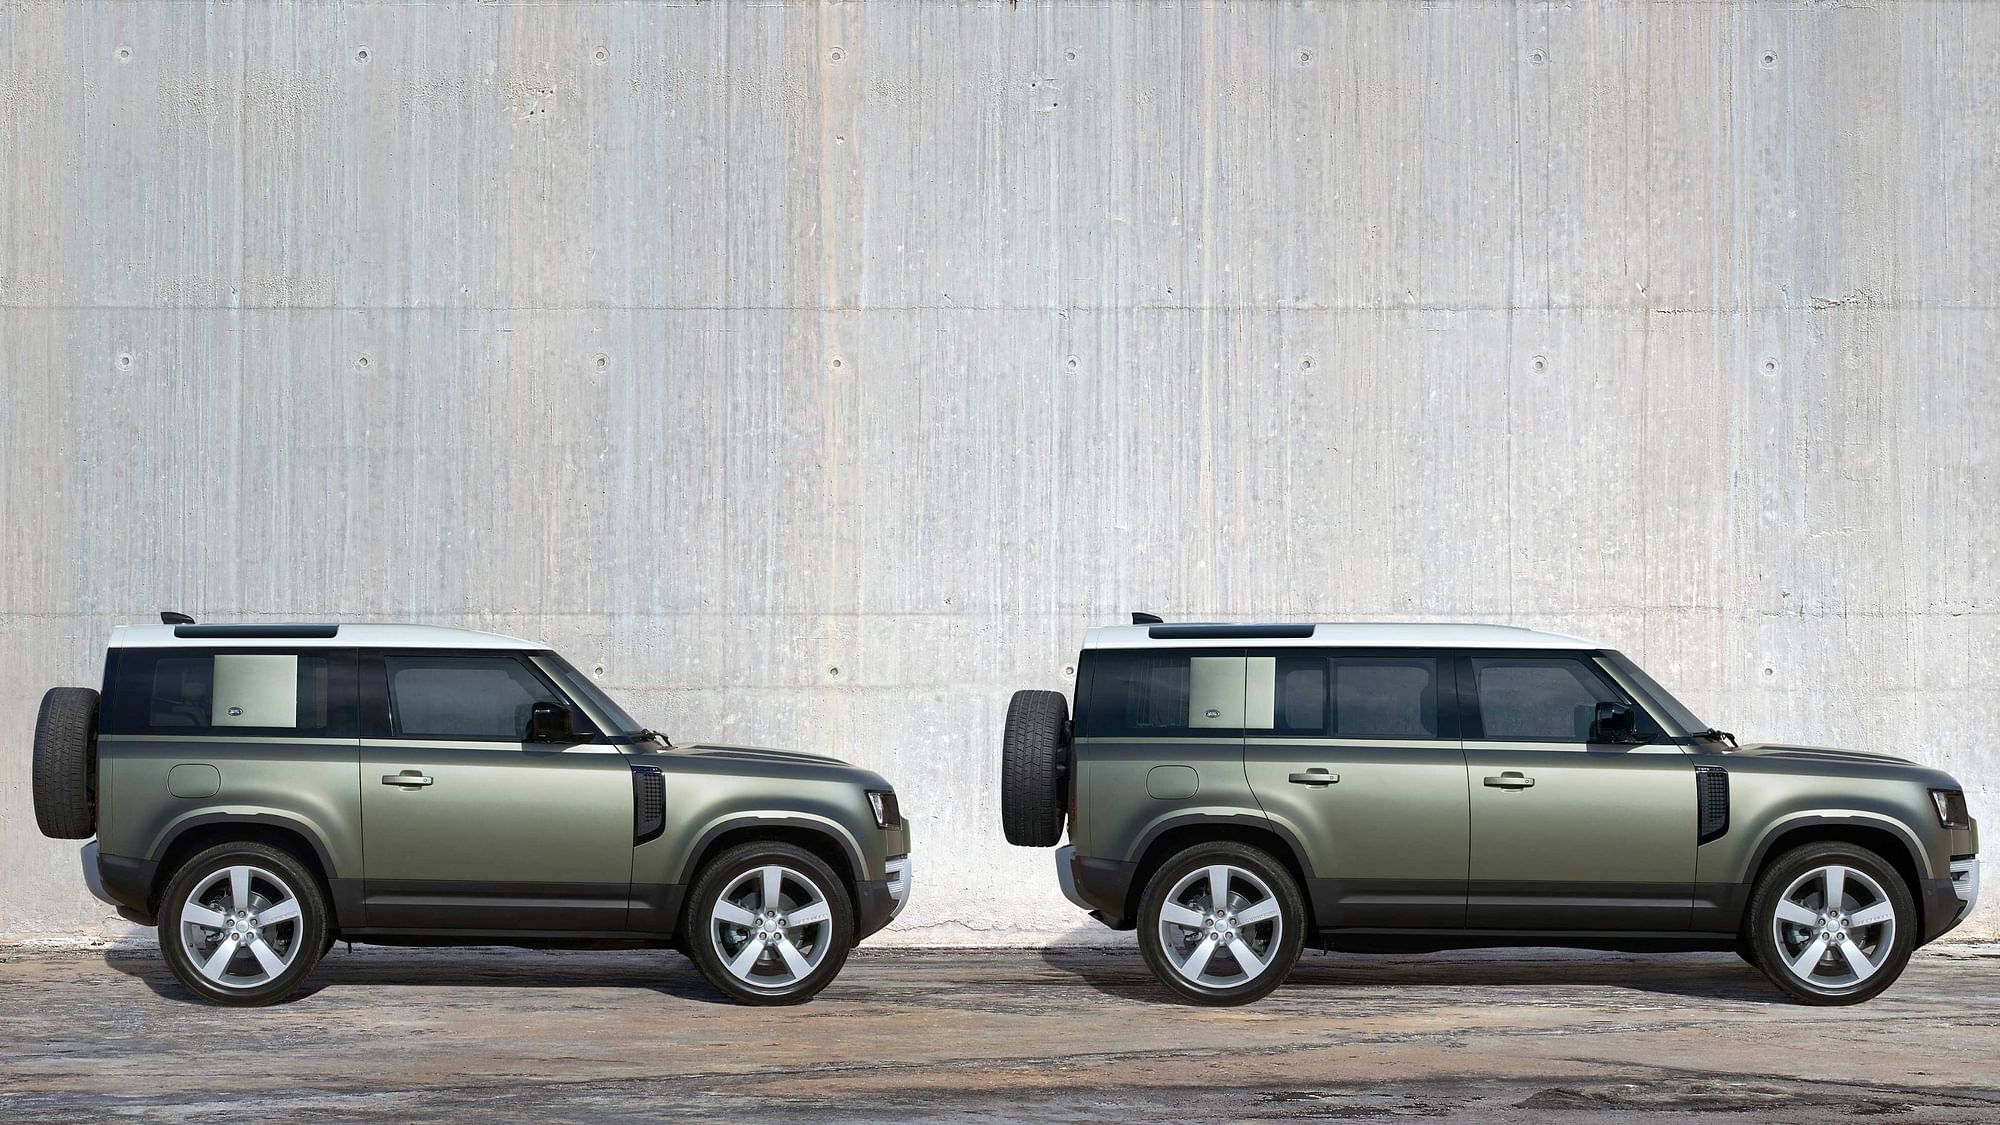 The Land Rover Defender comes in two variants - the 90 (three-door) and 100 (five-door) models.